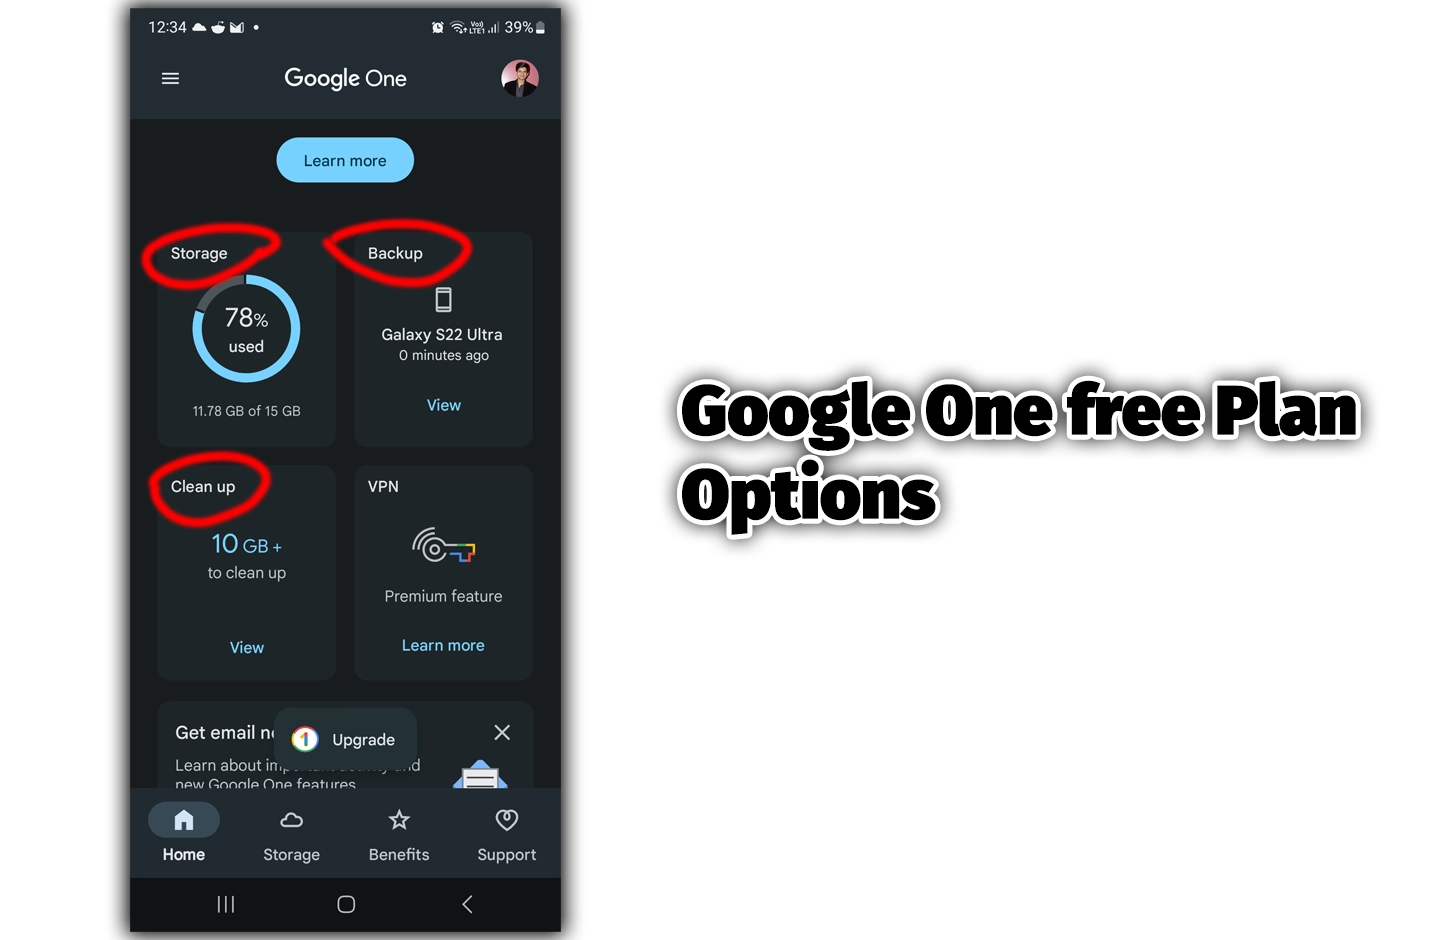 Google One free Plan Benefits